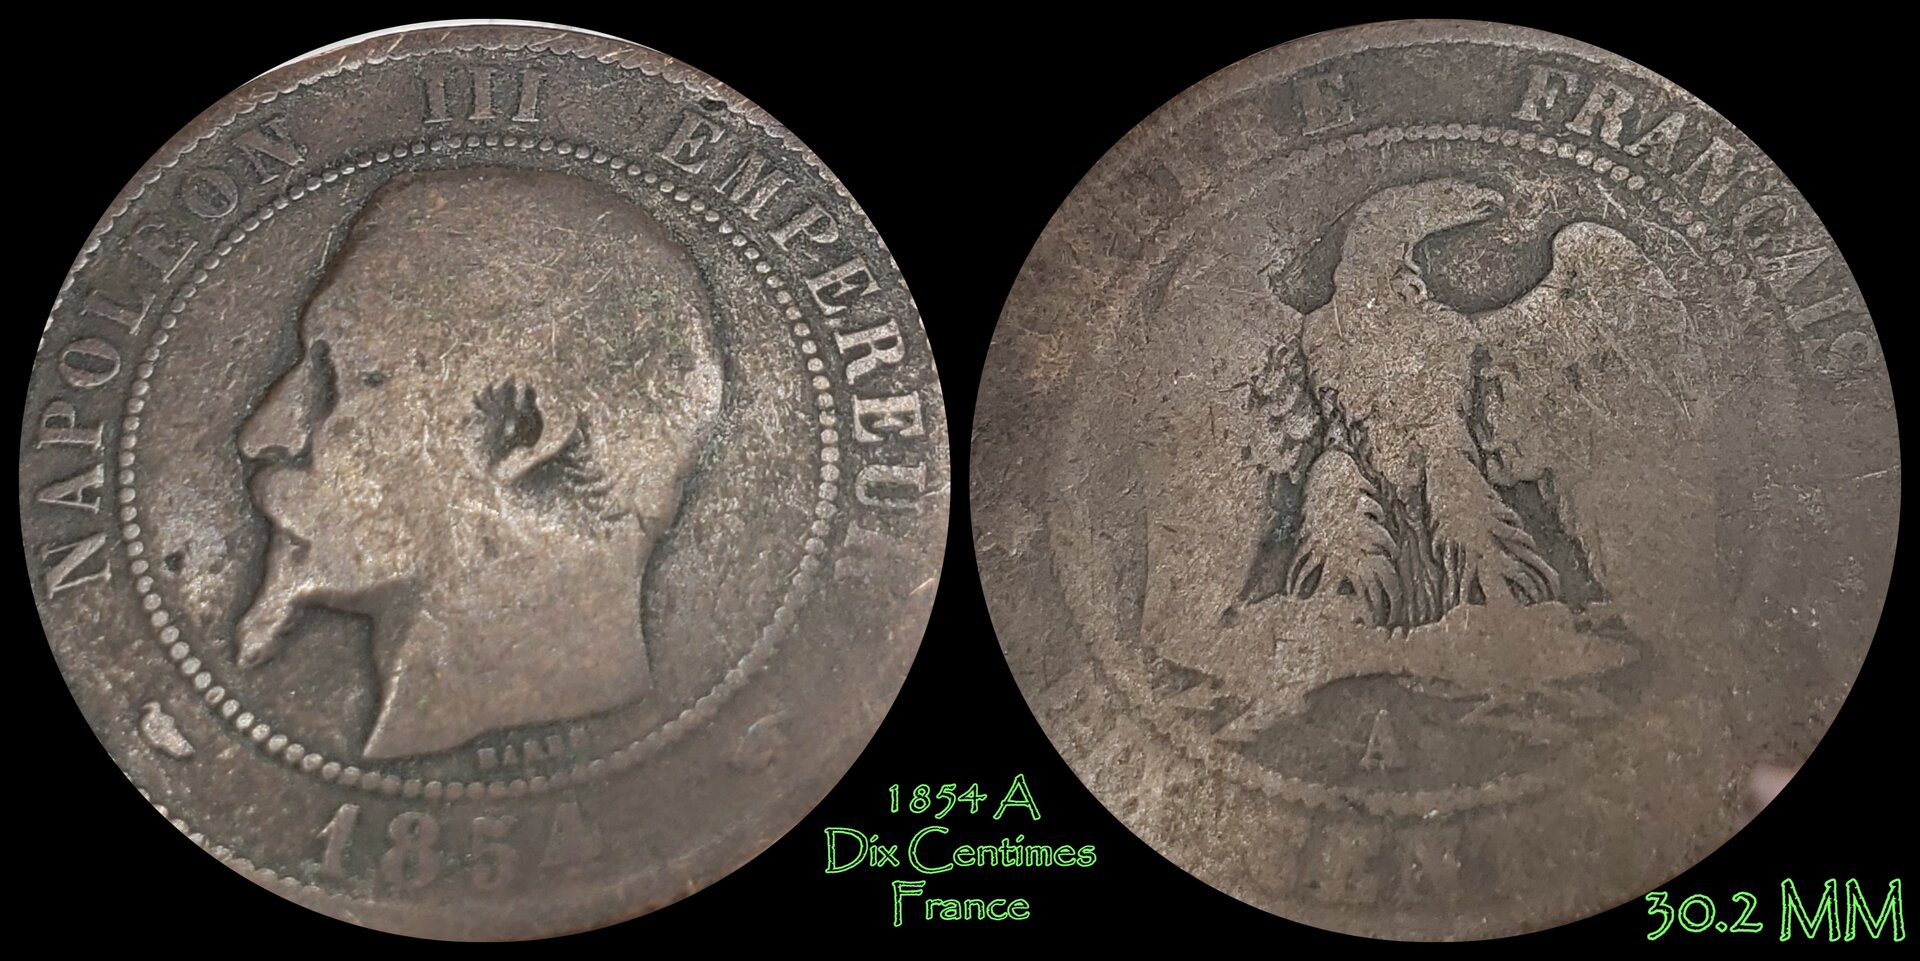 1854 A Dix cents.jpg